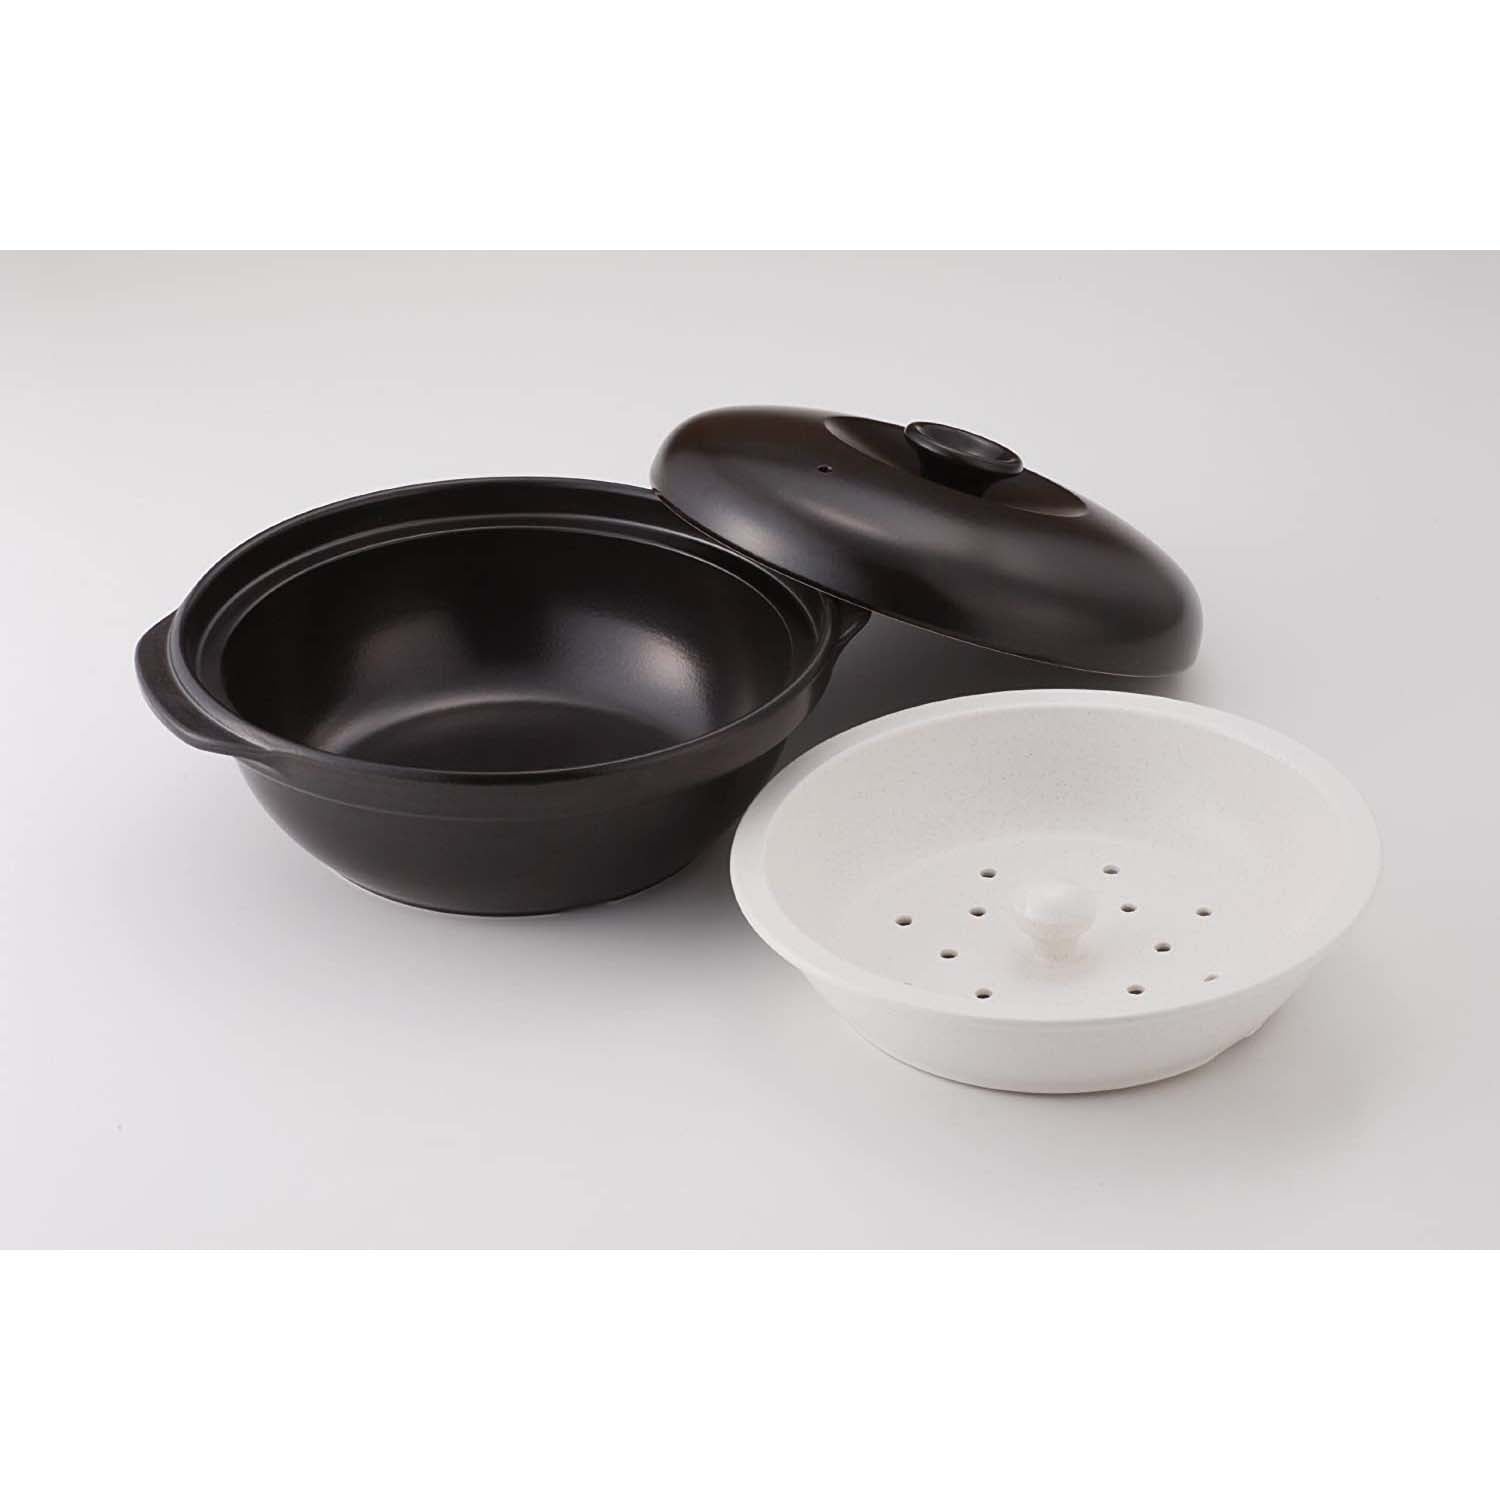 Tohi Ceramics 28Cm Japanese Ceramic Casserole Pot with Steamer Insert